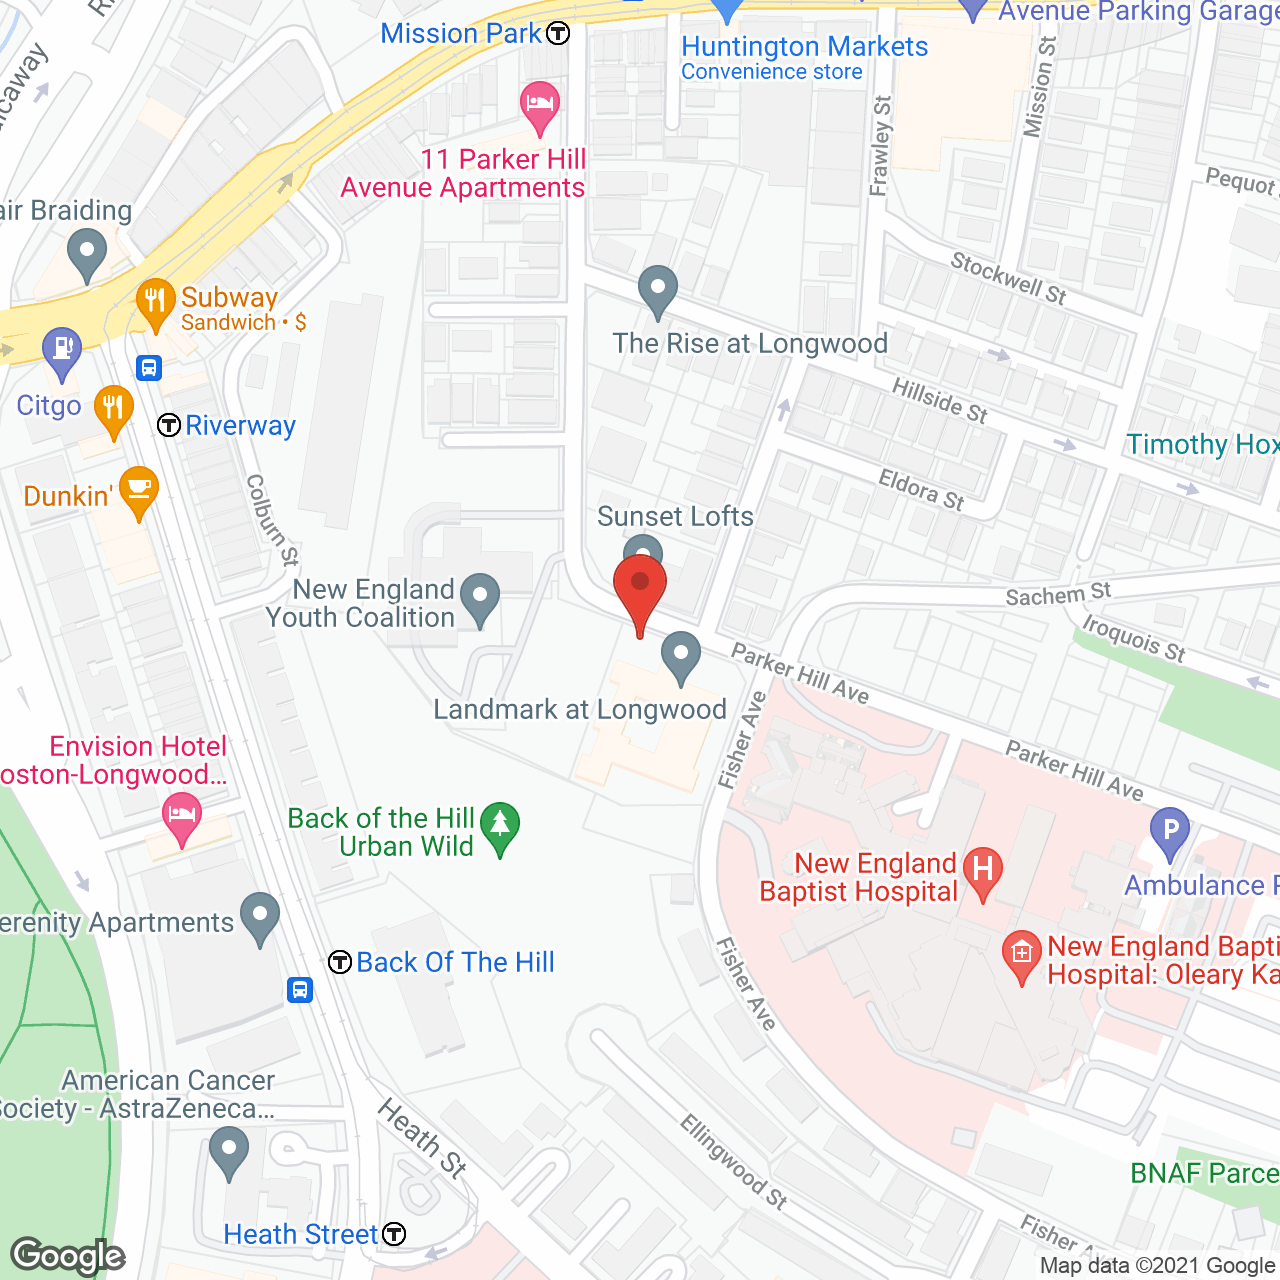 Landmark at Longwood in google map